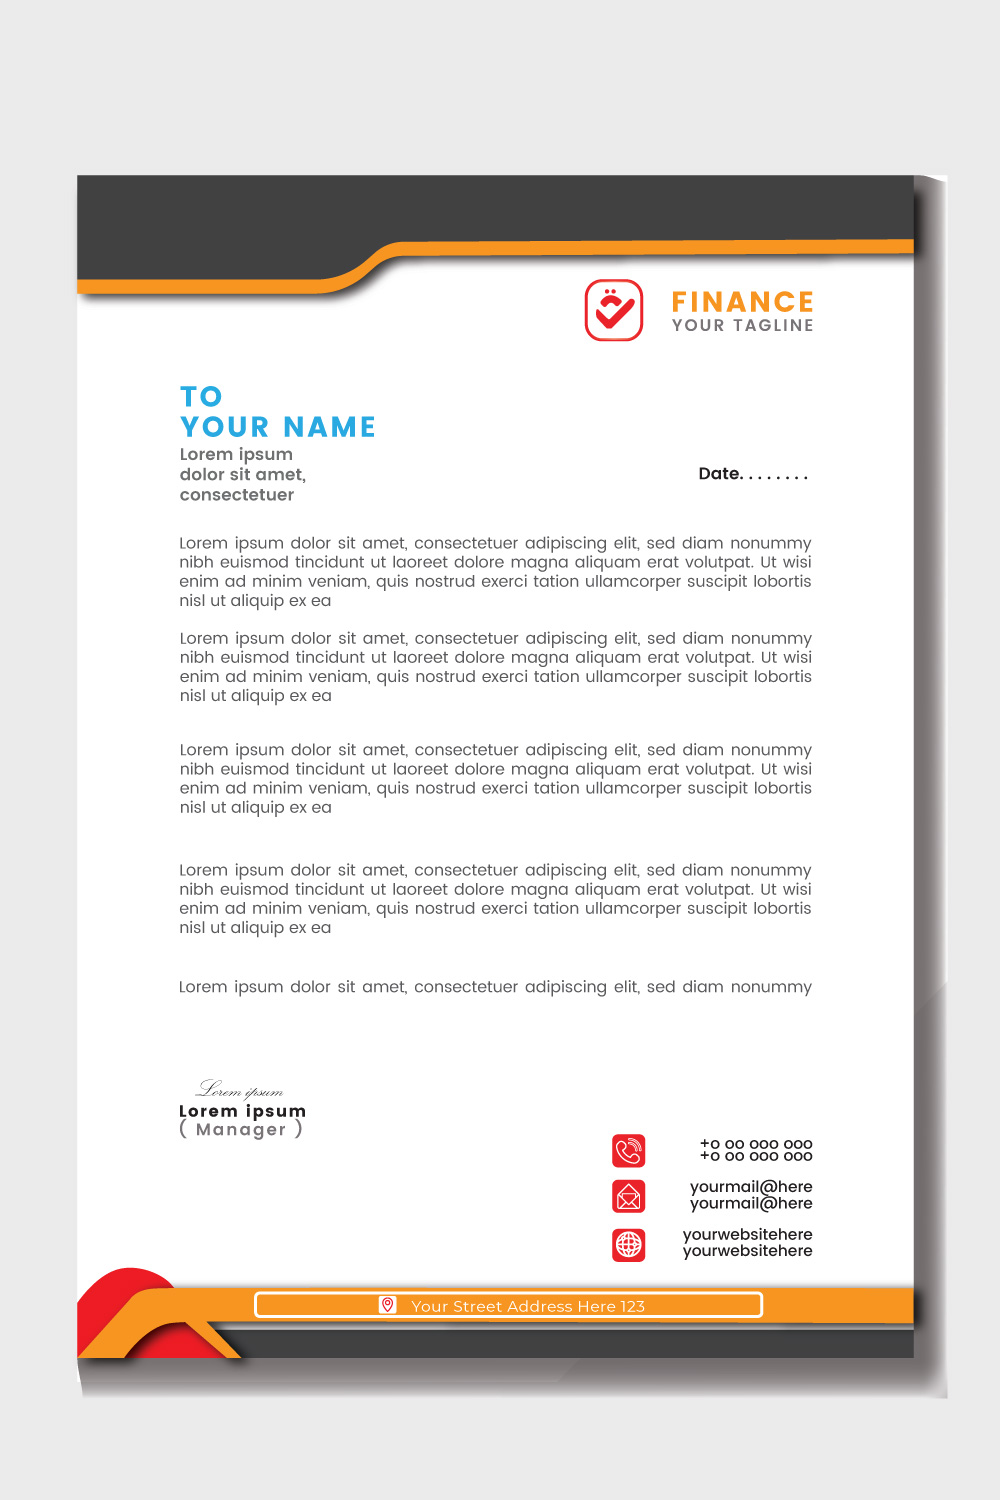 03 Modern letterhead template | Letterhead template design for your business pinterest preview image.